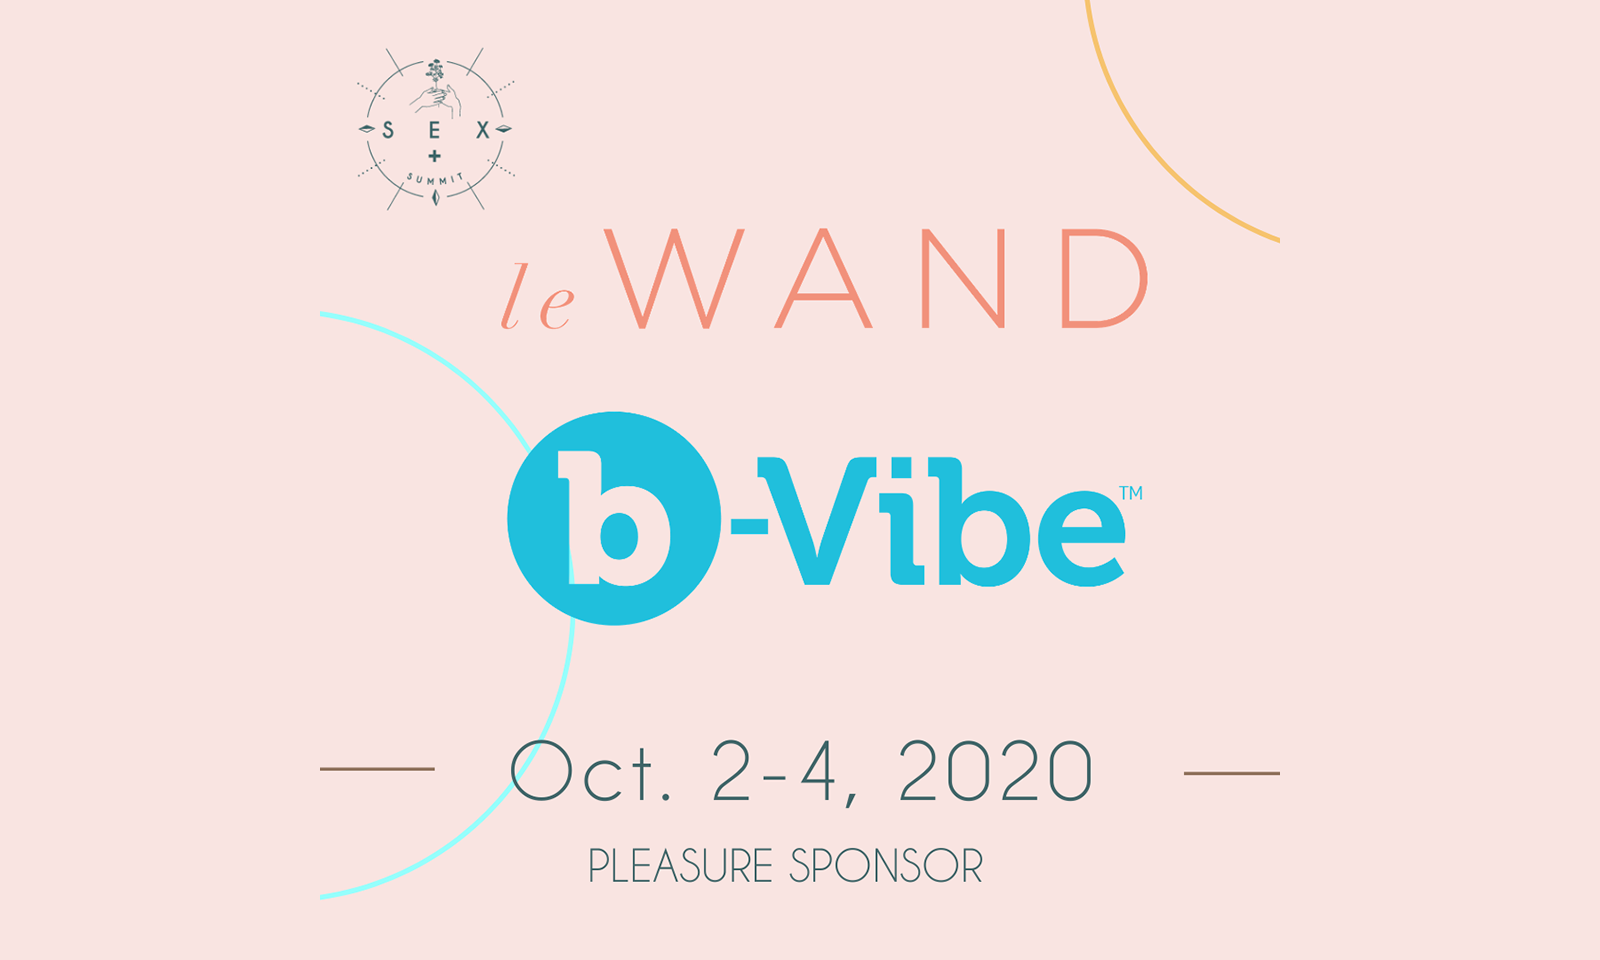 Le Wand, b-Vibe to Sponsor Upcoming Virtual SEX+ Summit